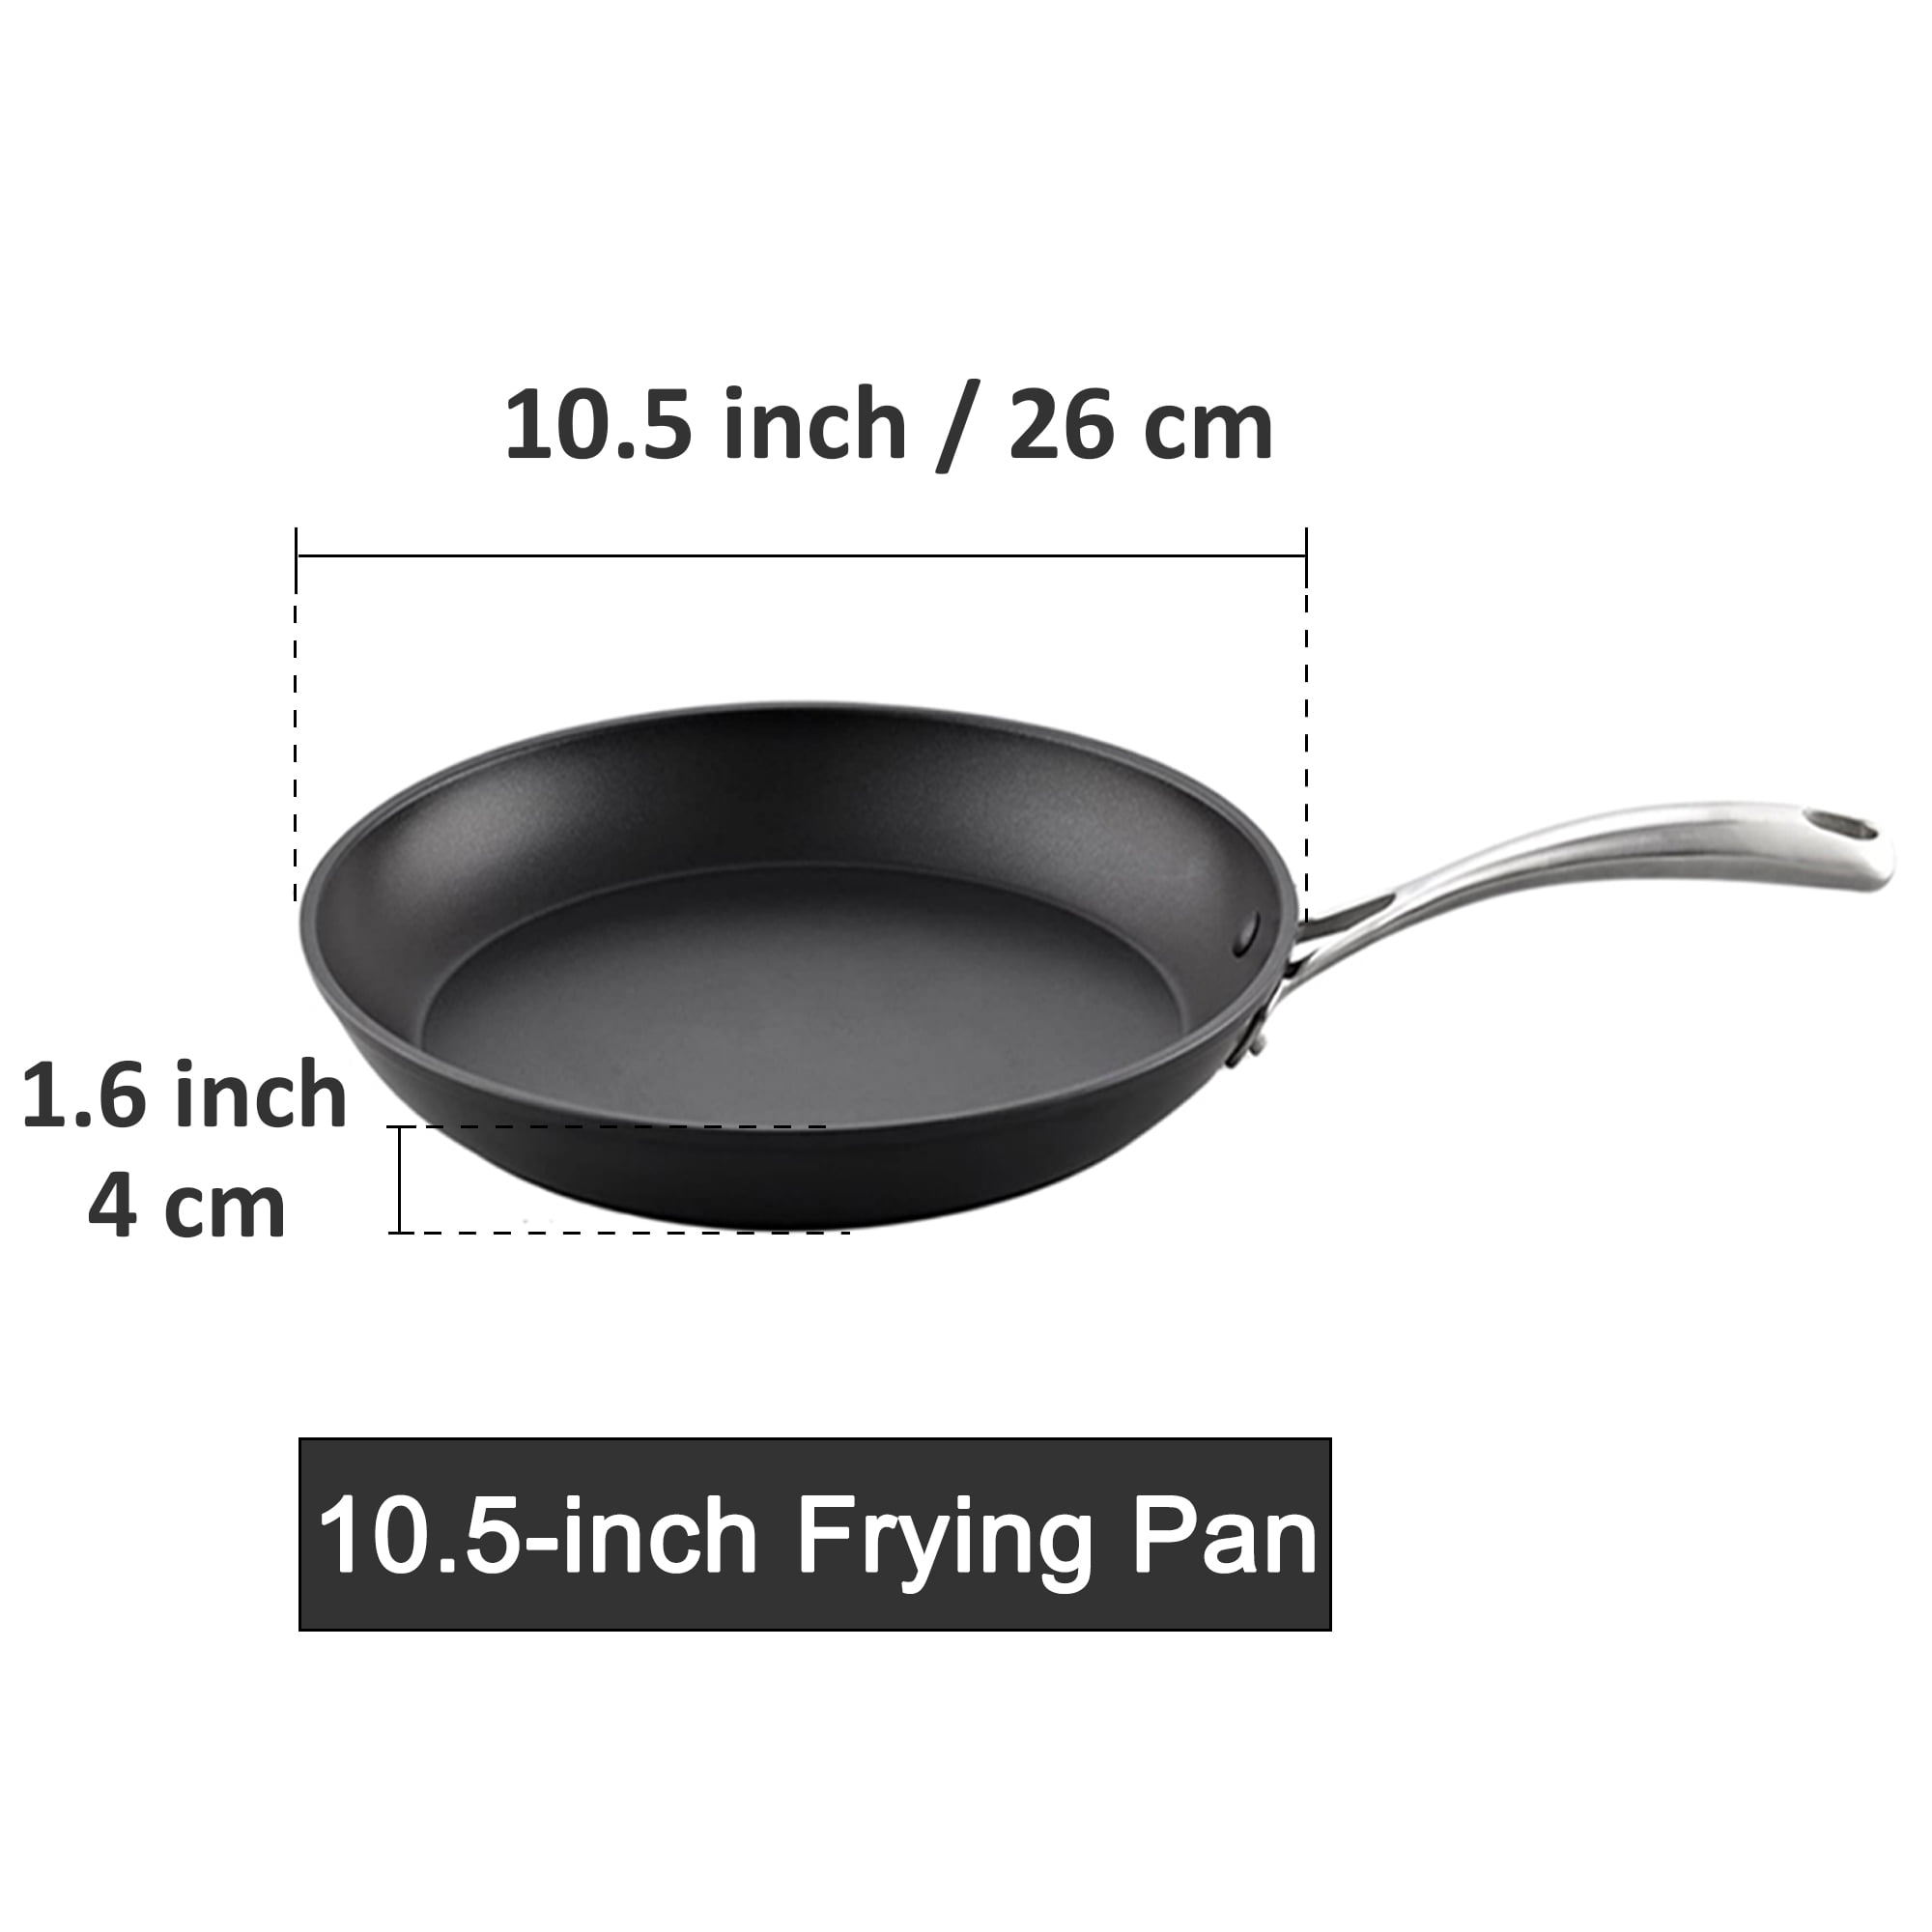 Engarc Cast Iron Omelette Pan - 10 Inch Fry Pan 10 cm diameter 1 L capacity  Price in India - Buy Engarc Cast Iron Omelette Pan - 10 Inch Fry Pan 10